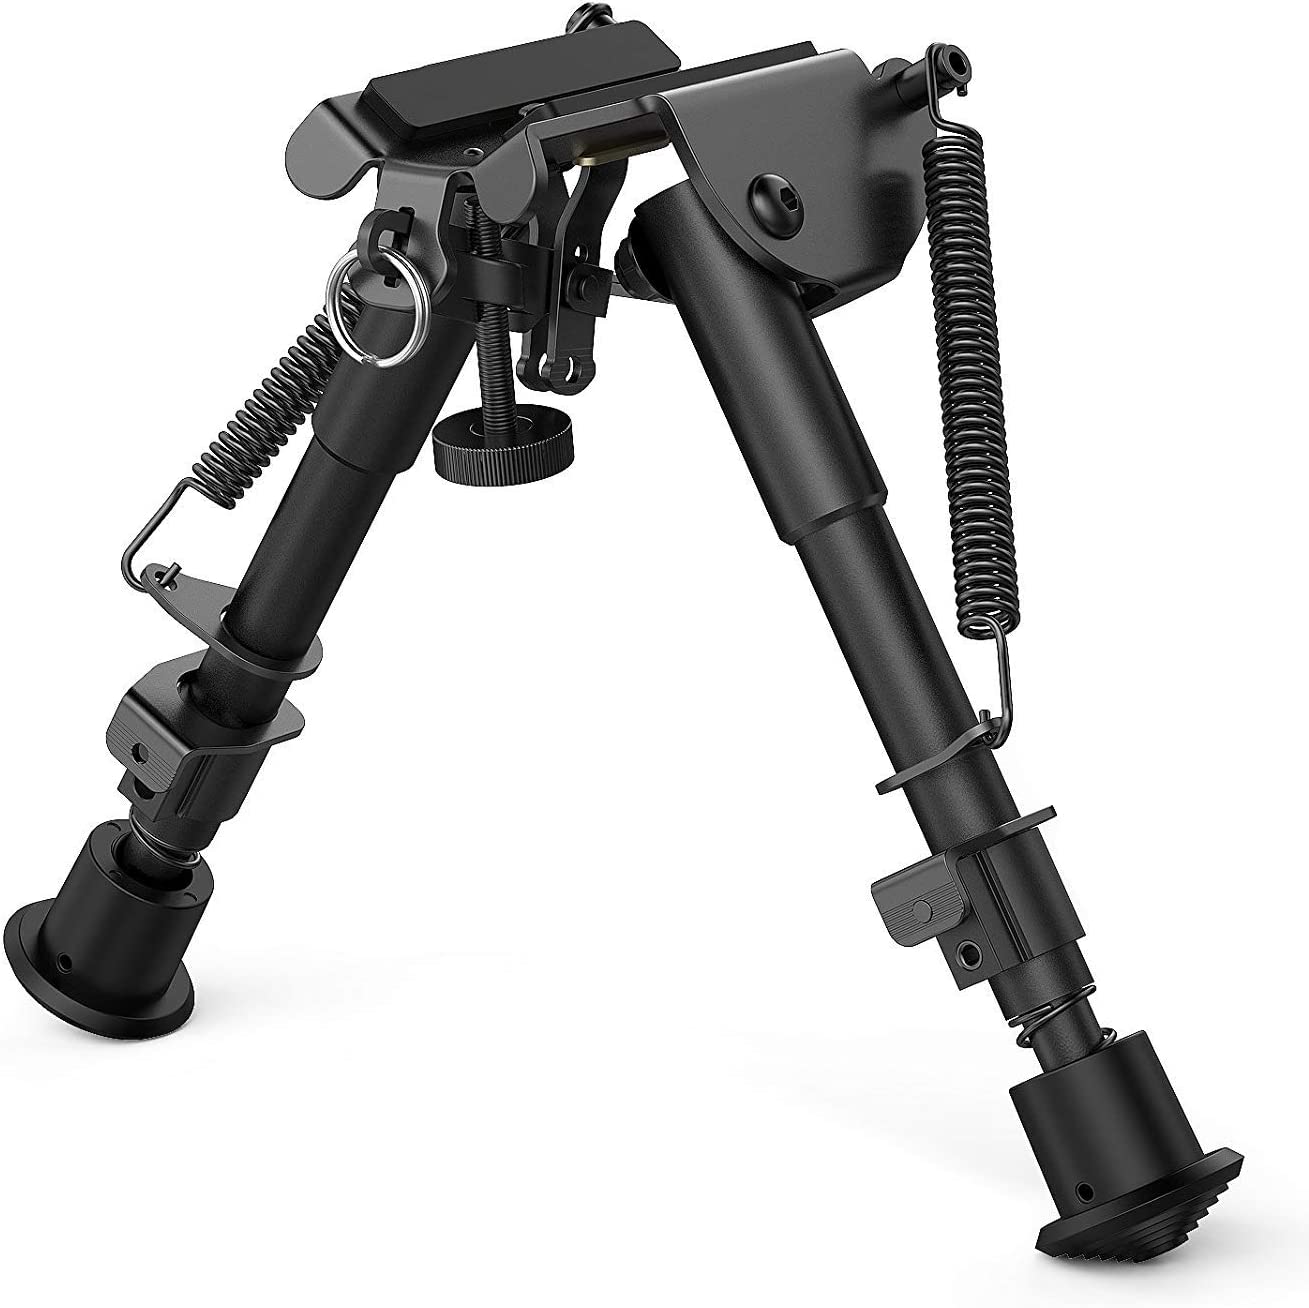 Feyachi RB1001 Tactical Rifle Bipod - Swivel Adjustable